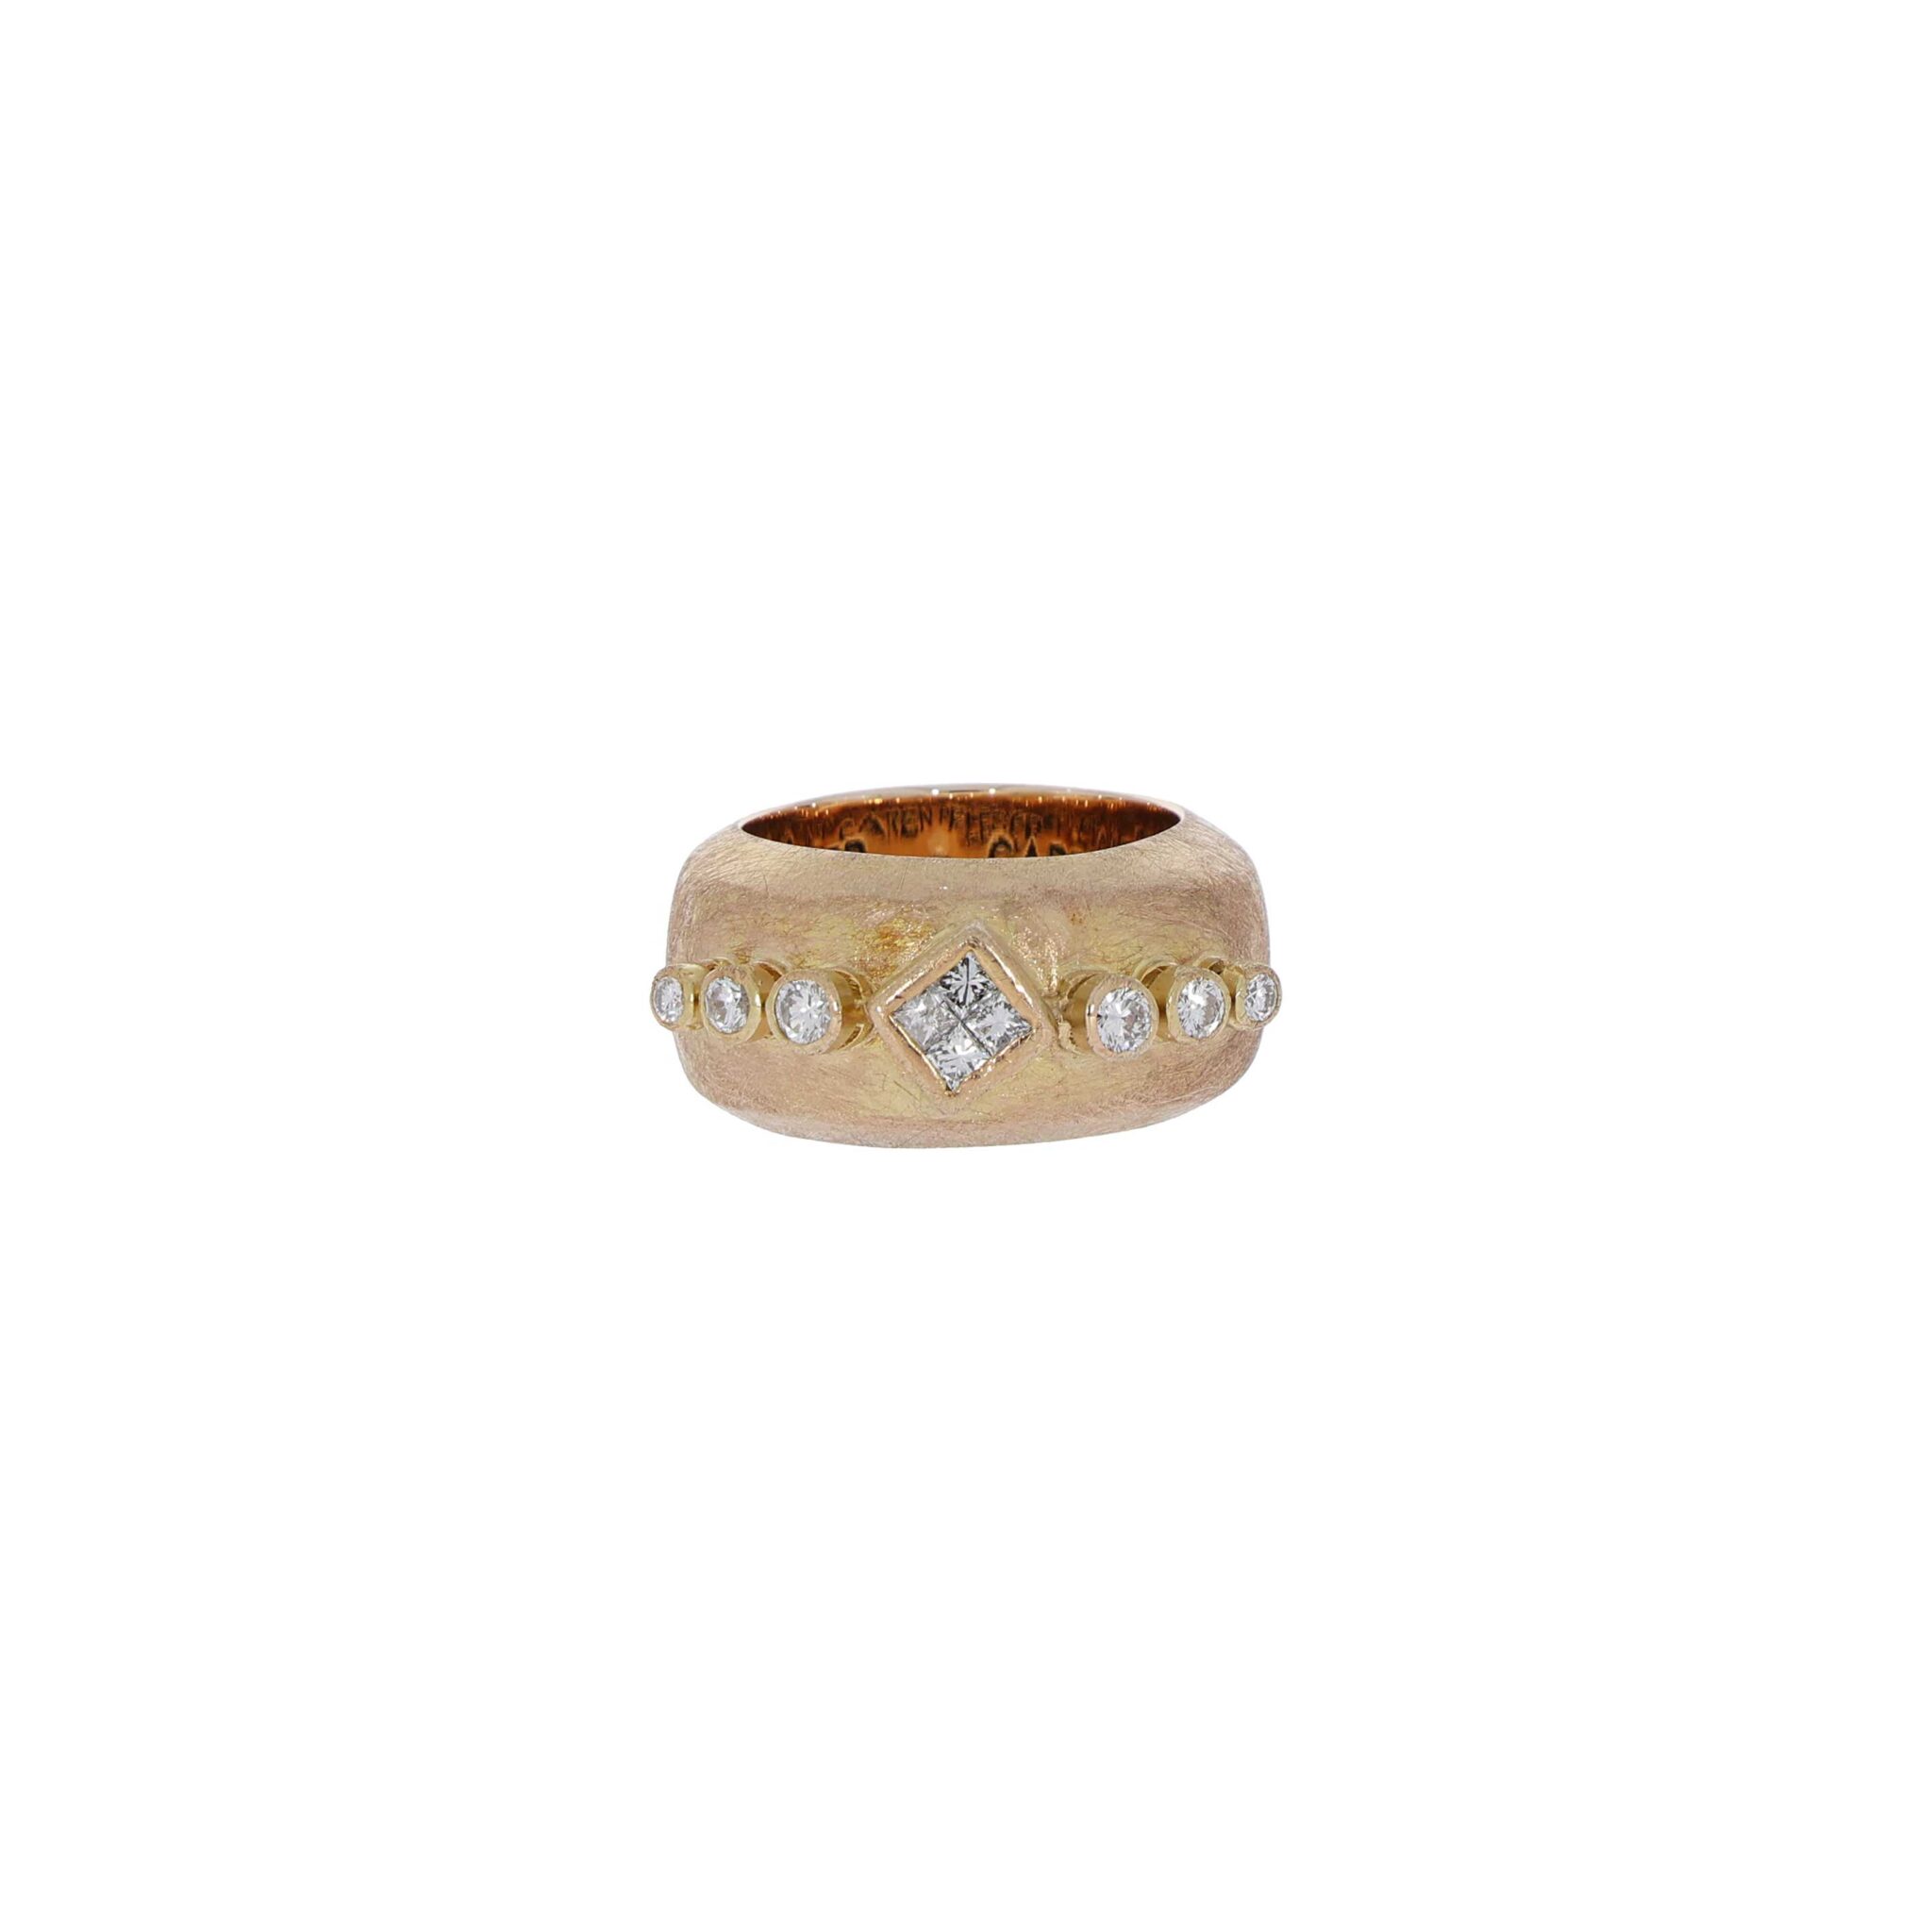 Caren Pfleger Ring Gr.58 Gelbgold 585 / 14K mit ca. 0,8ct Diamanten